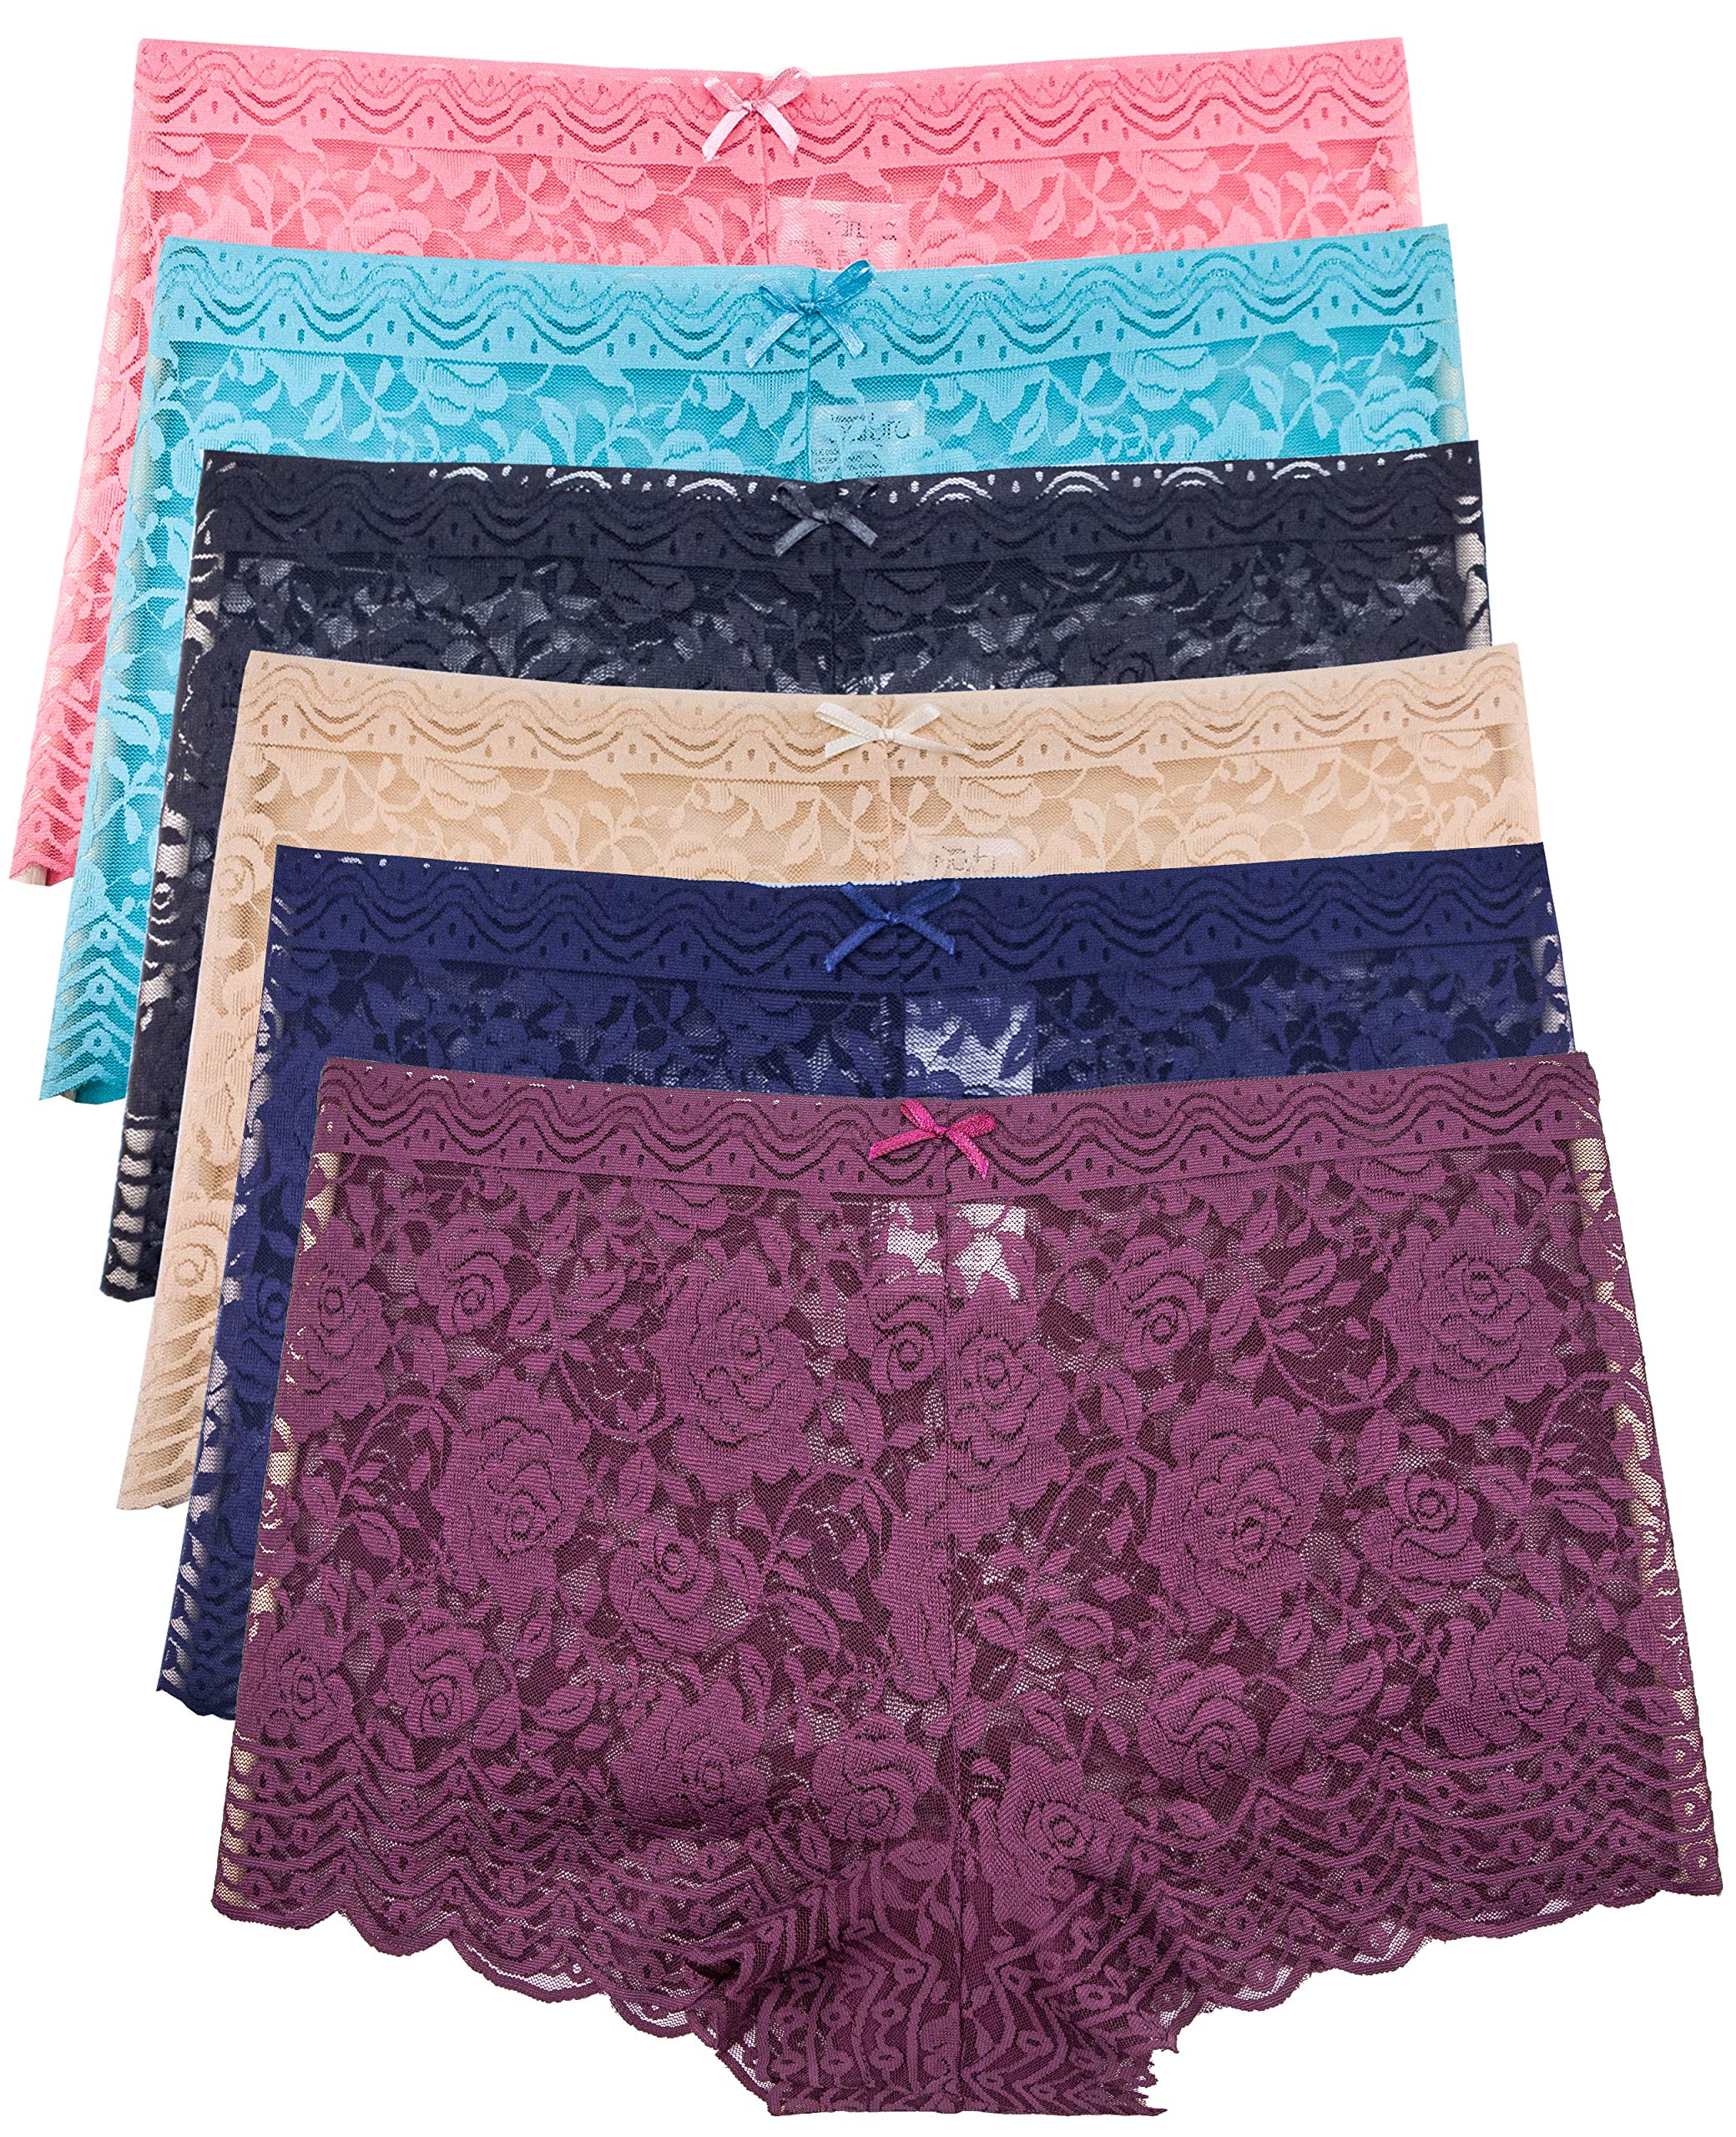 6 Pack Of Regular & Plus Size Lace Boyshort Panties